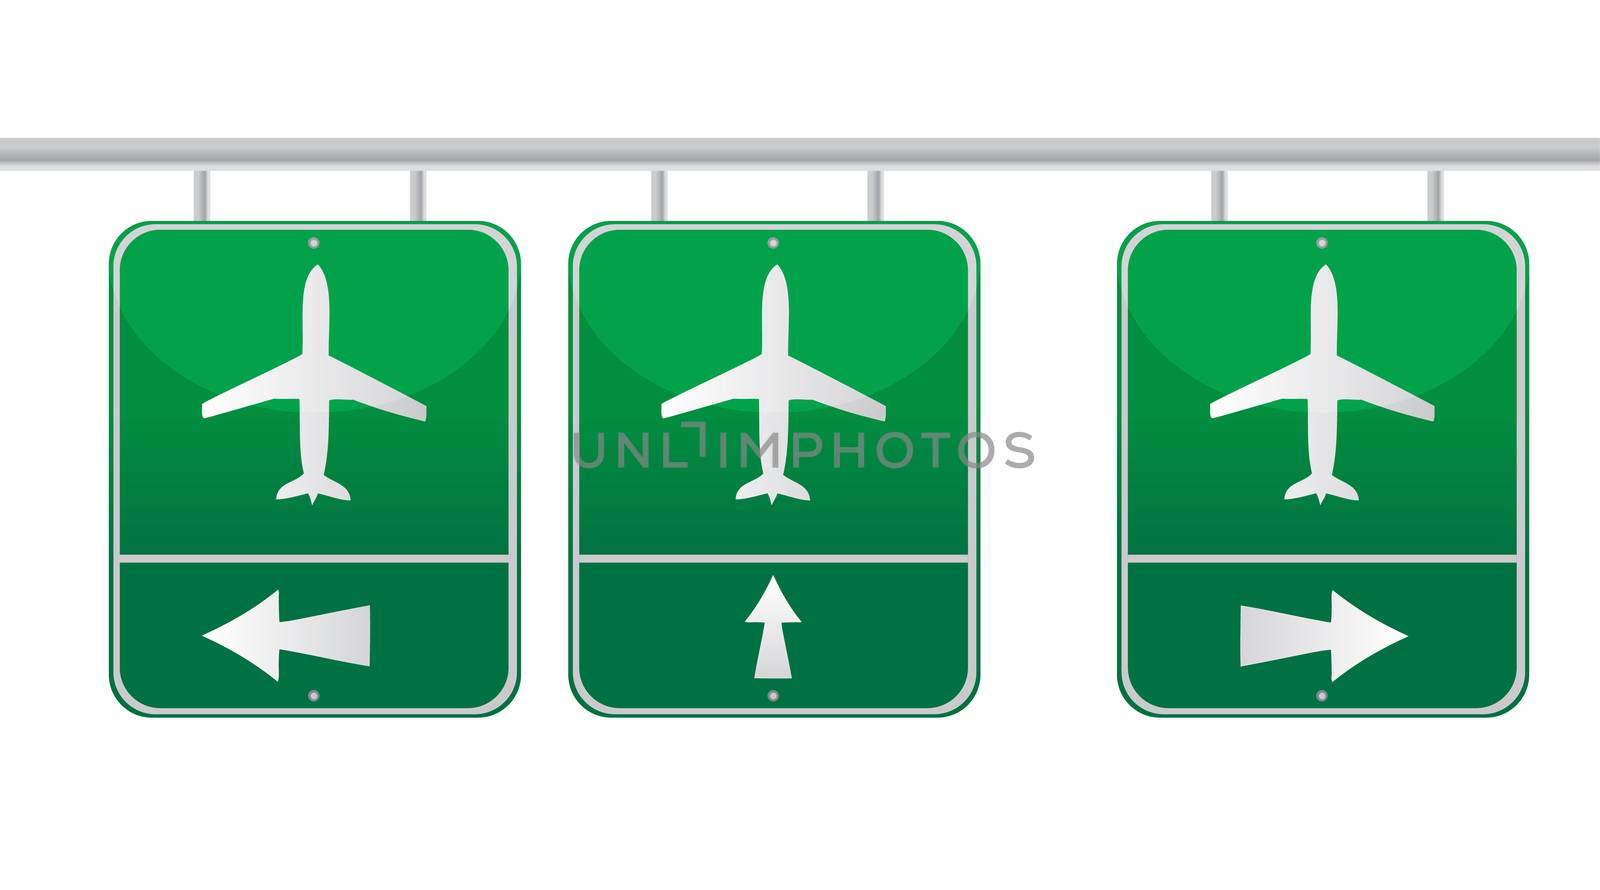 aircraft traffic sign illustration design over whiteaircraft traffic sign illustration design over white